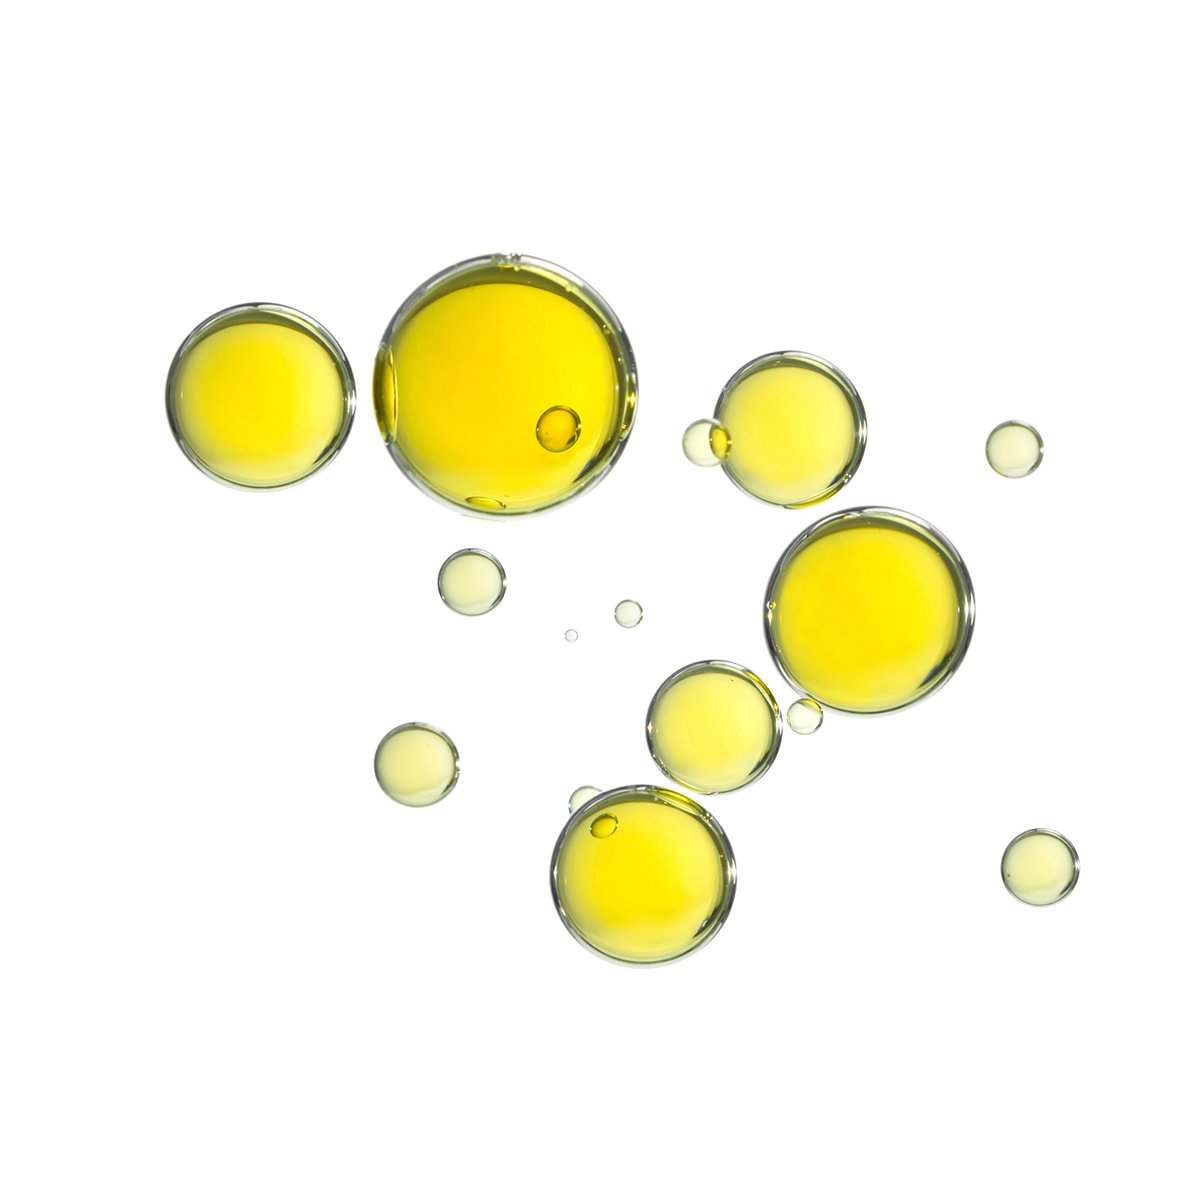 oil droplets